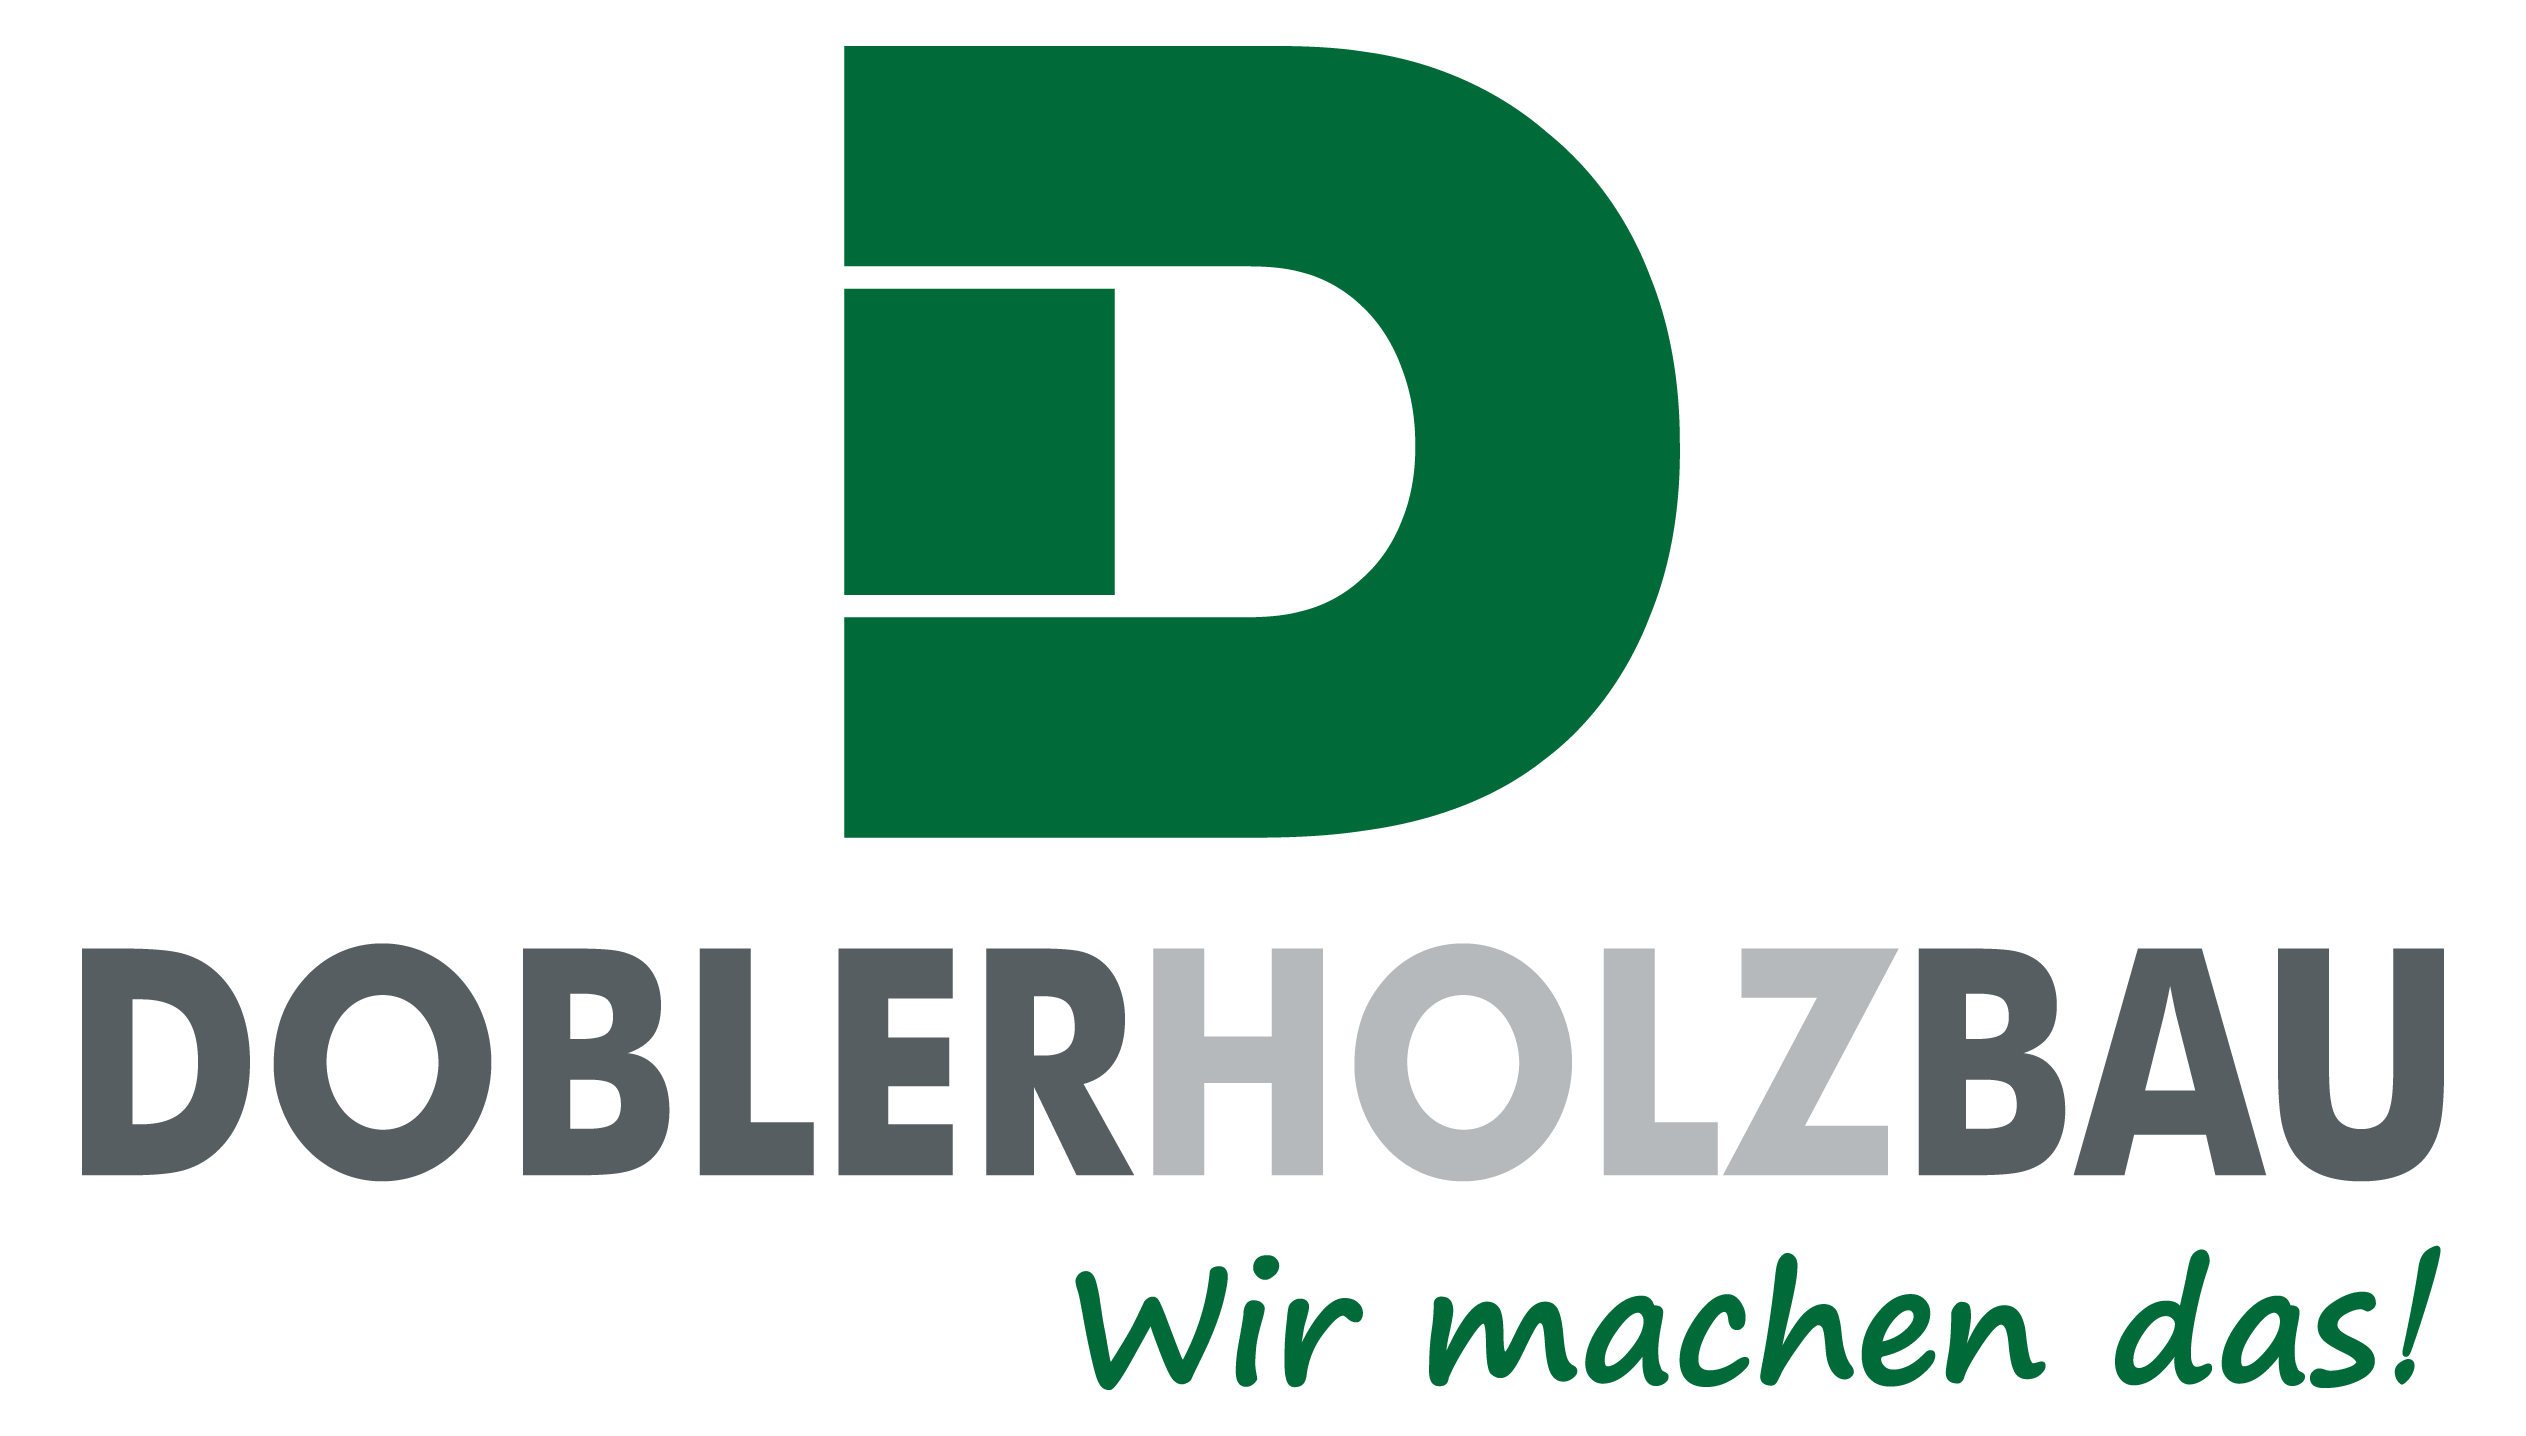 Logo Dobler Holzbau, großes grünes D und Schriftzug